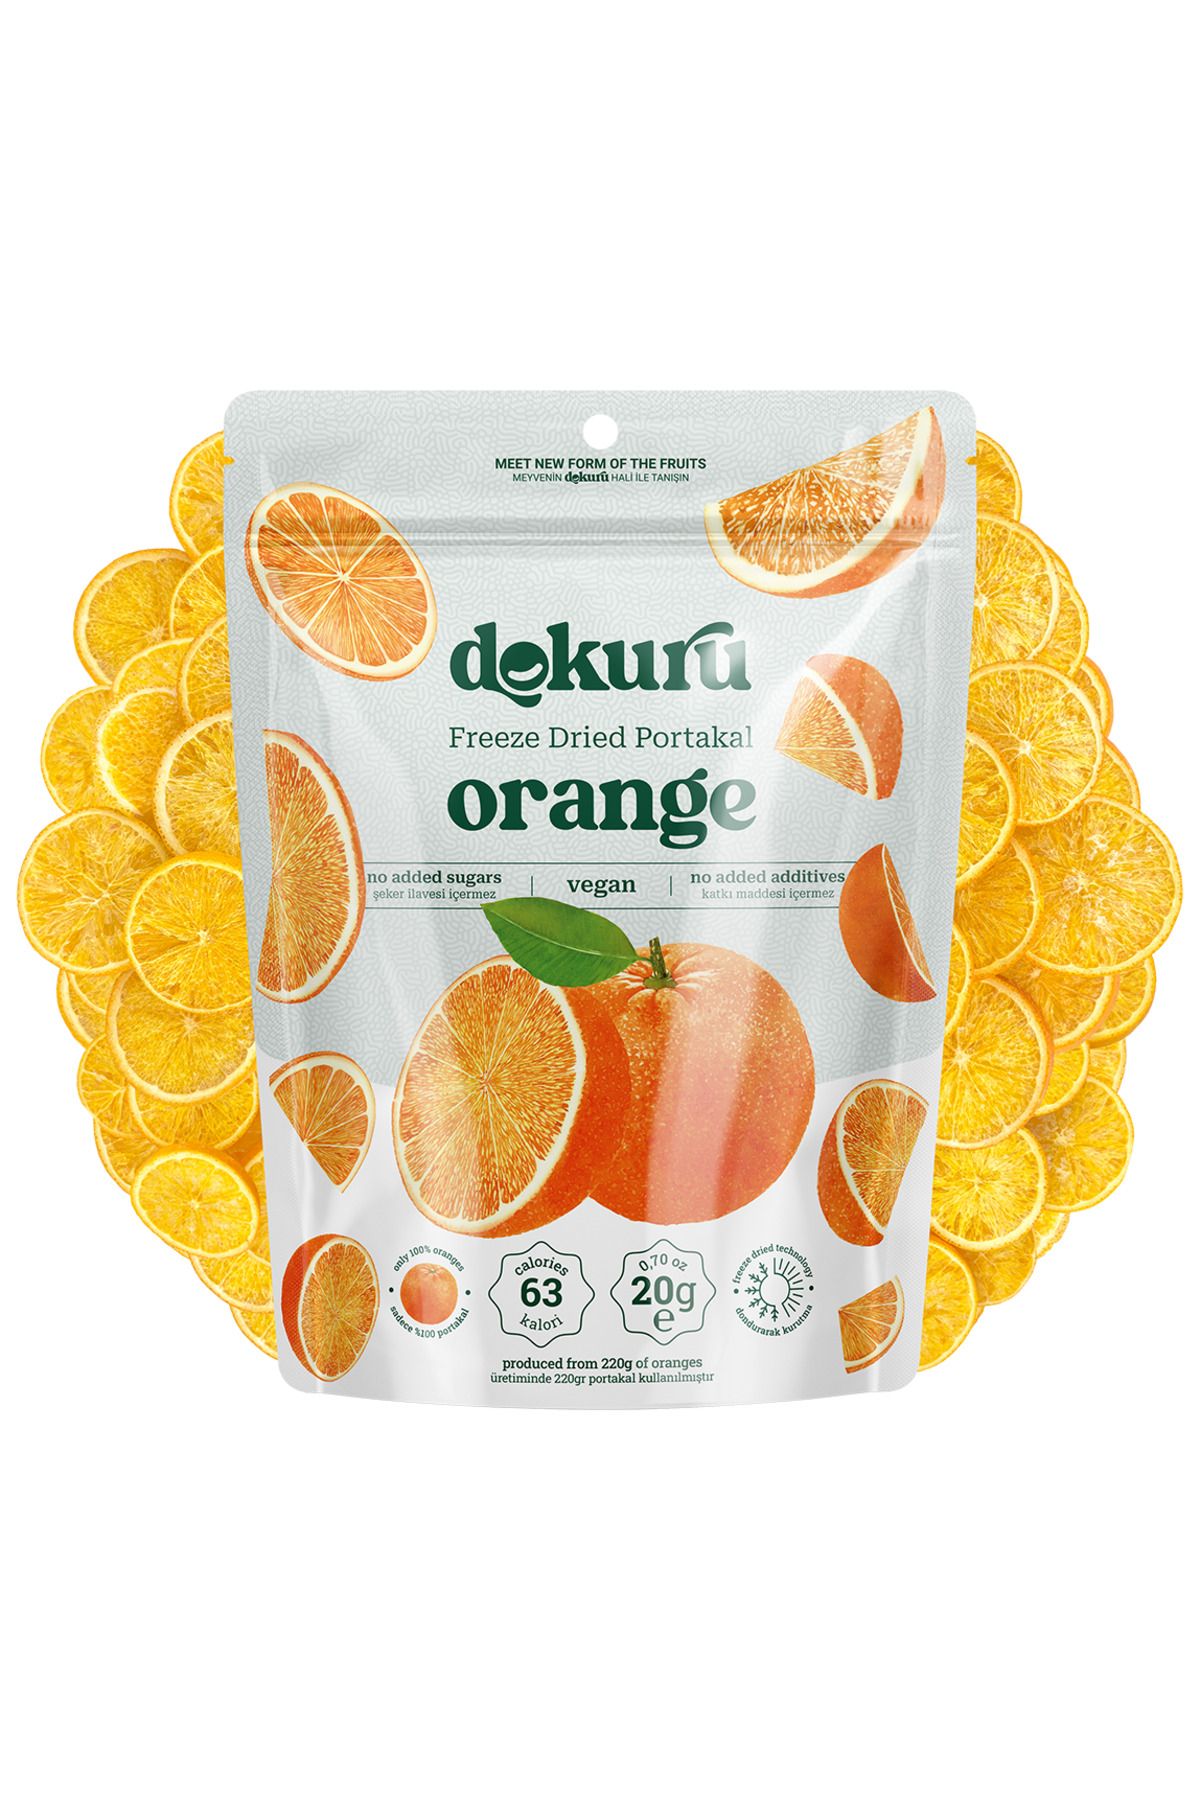 dokuru Portakal Kuru Meyve Cipsi - Dondurularak Kurutulmuş Freeze Dried Çıtır Portakal